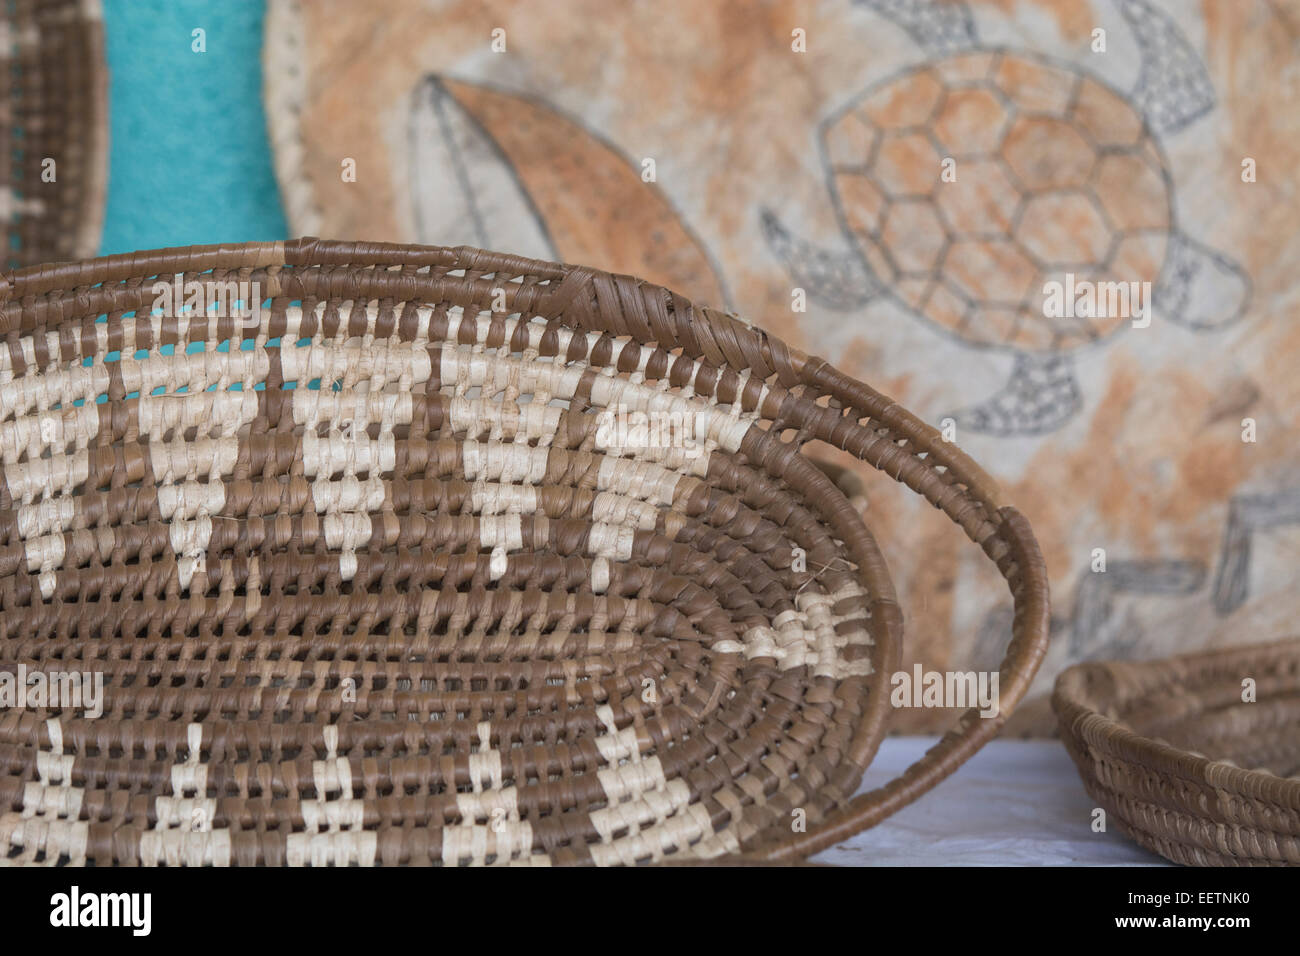 Kingdom of Tonga, Vava'u Islands, Neiafu. Hand woven souvenir baskets Stock  Photo - Alamy